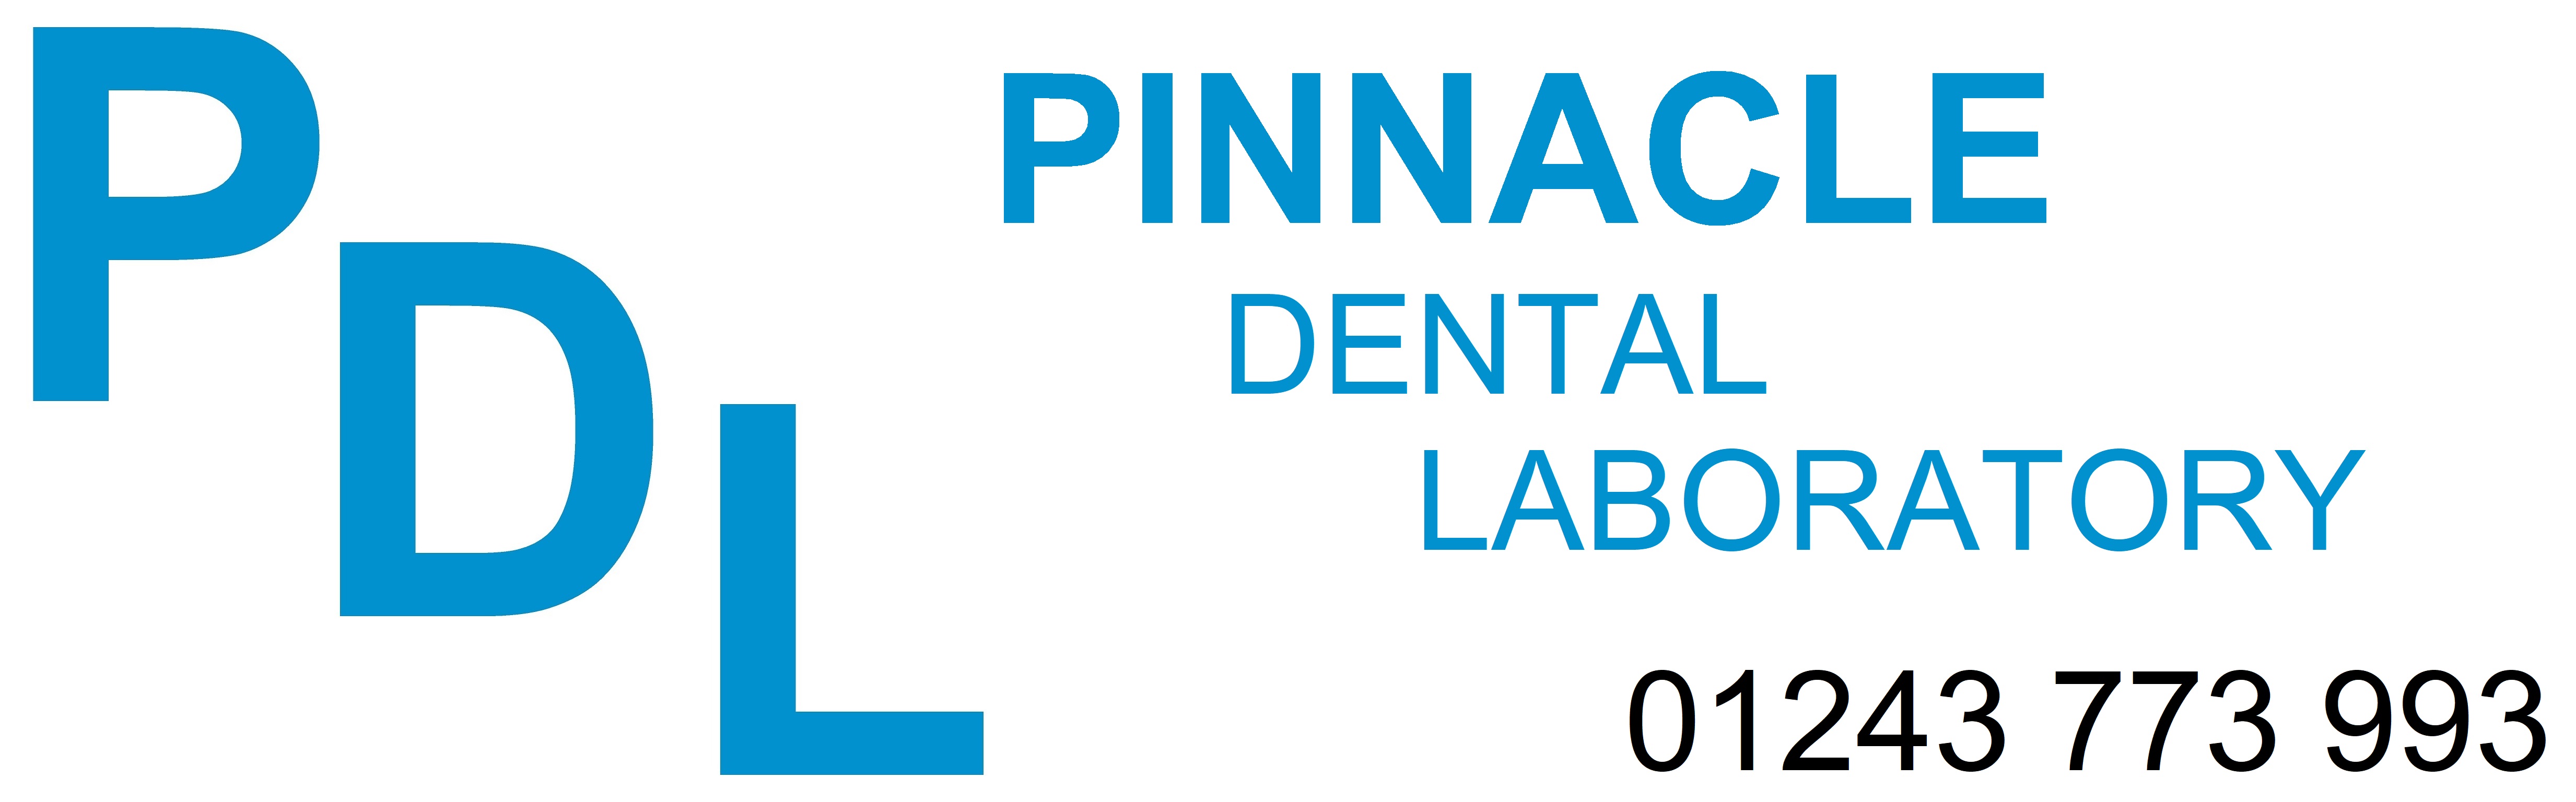 Pinnacle Dental Laboratory